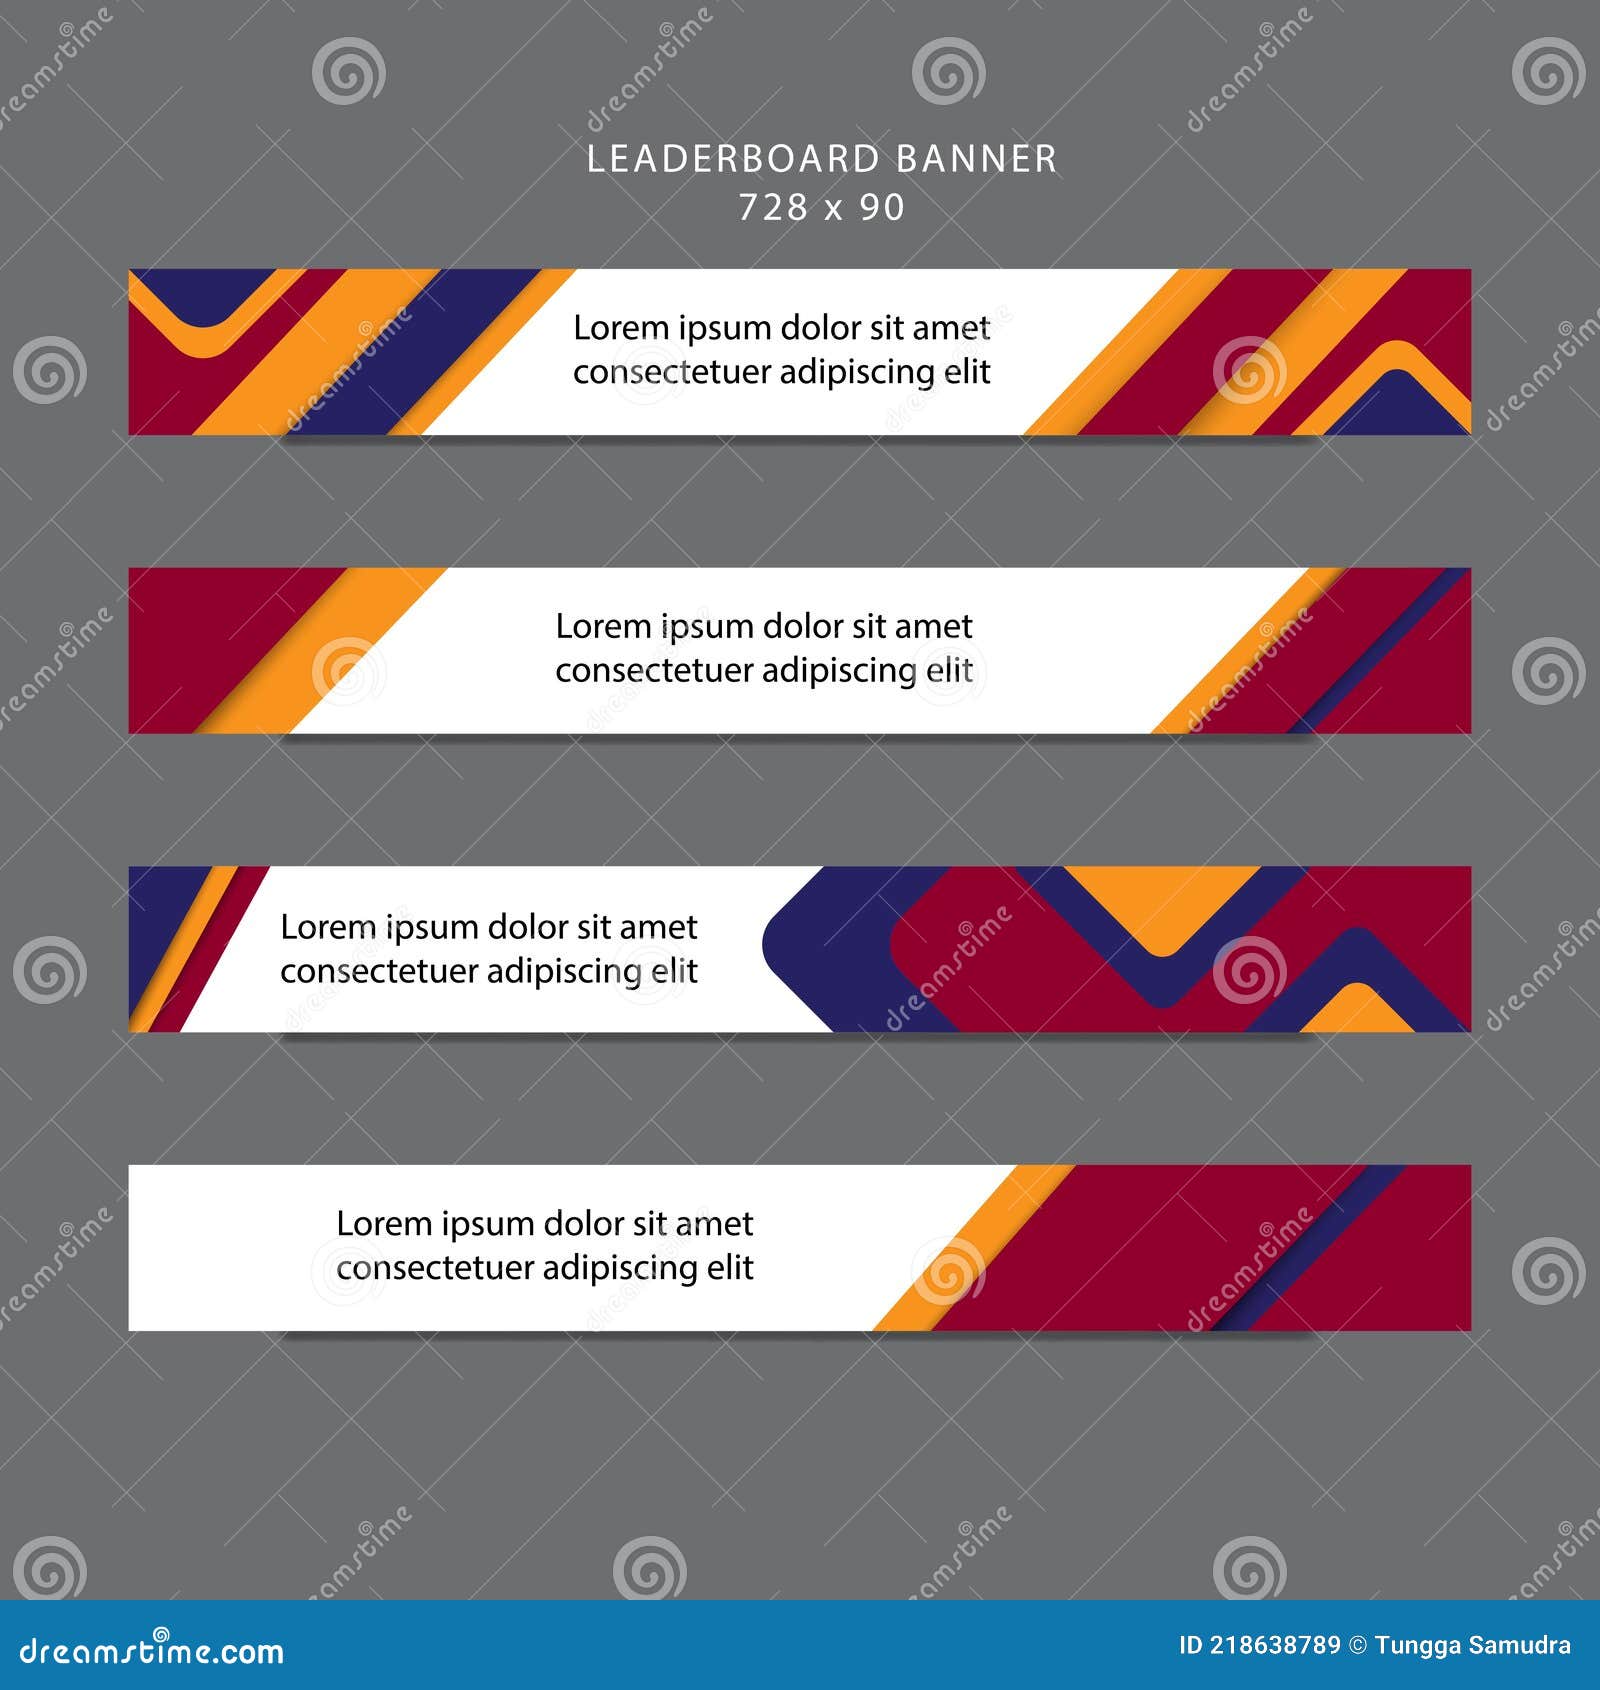 Leaderboard design pattern